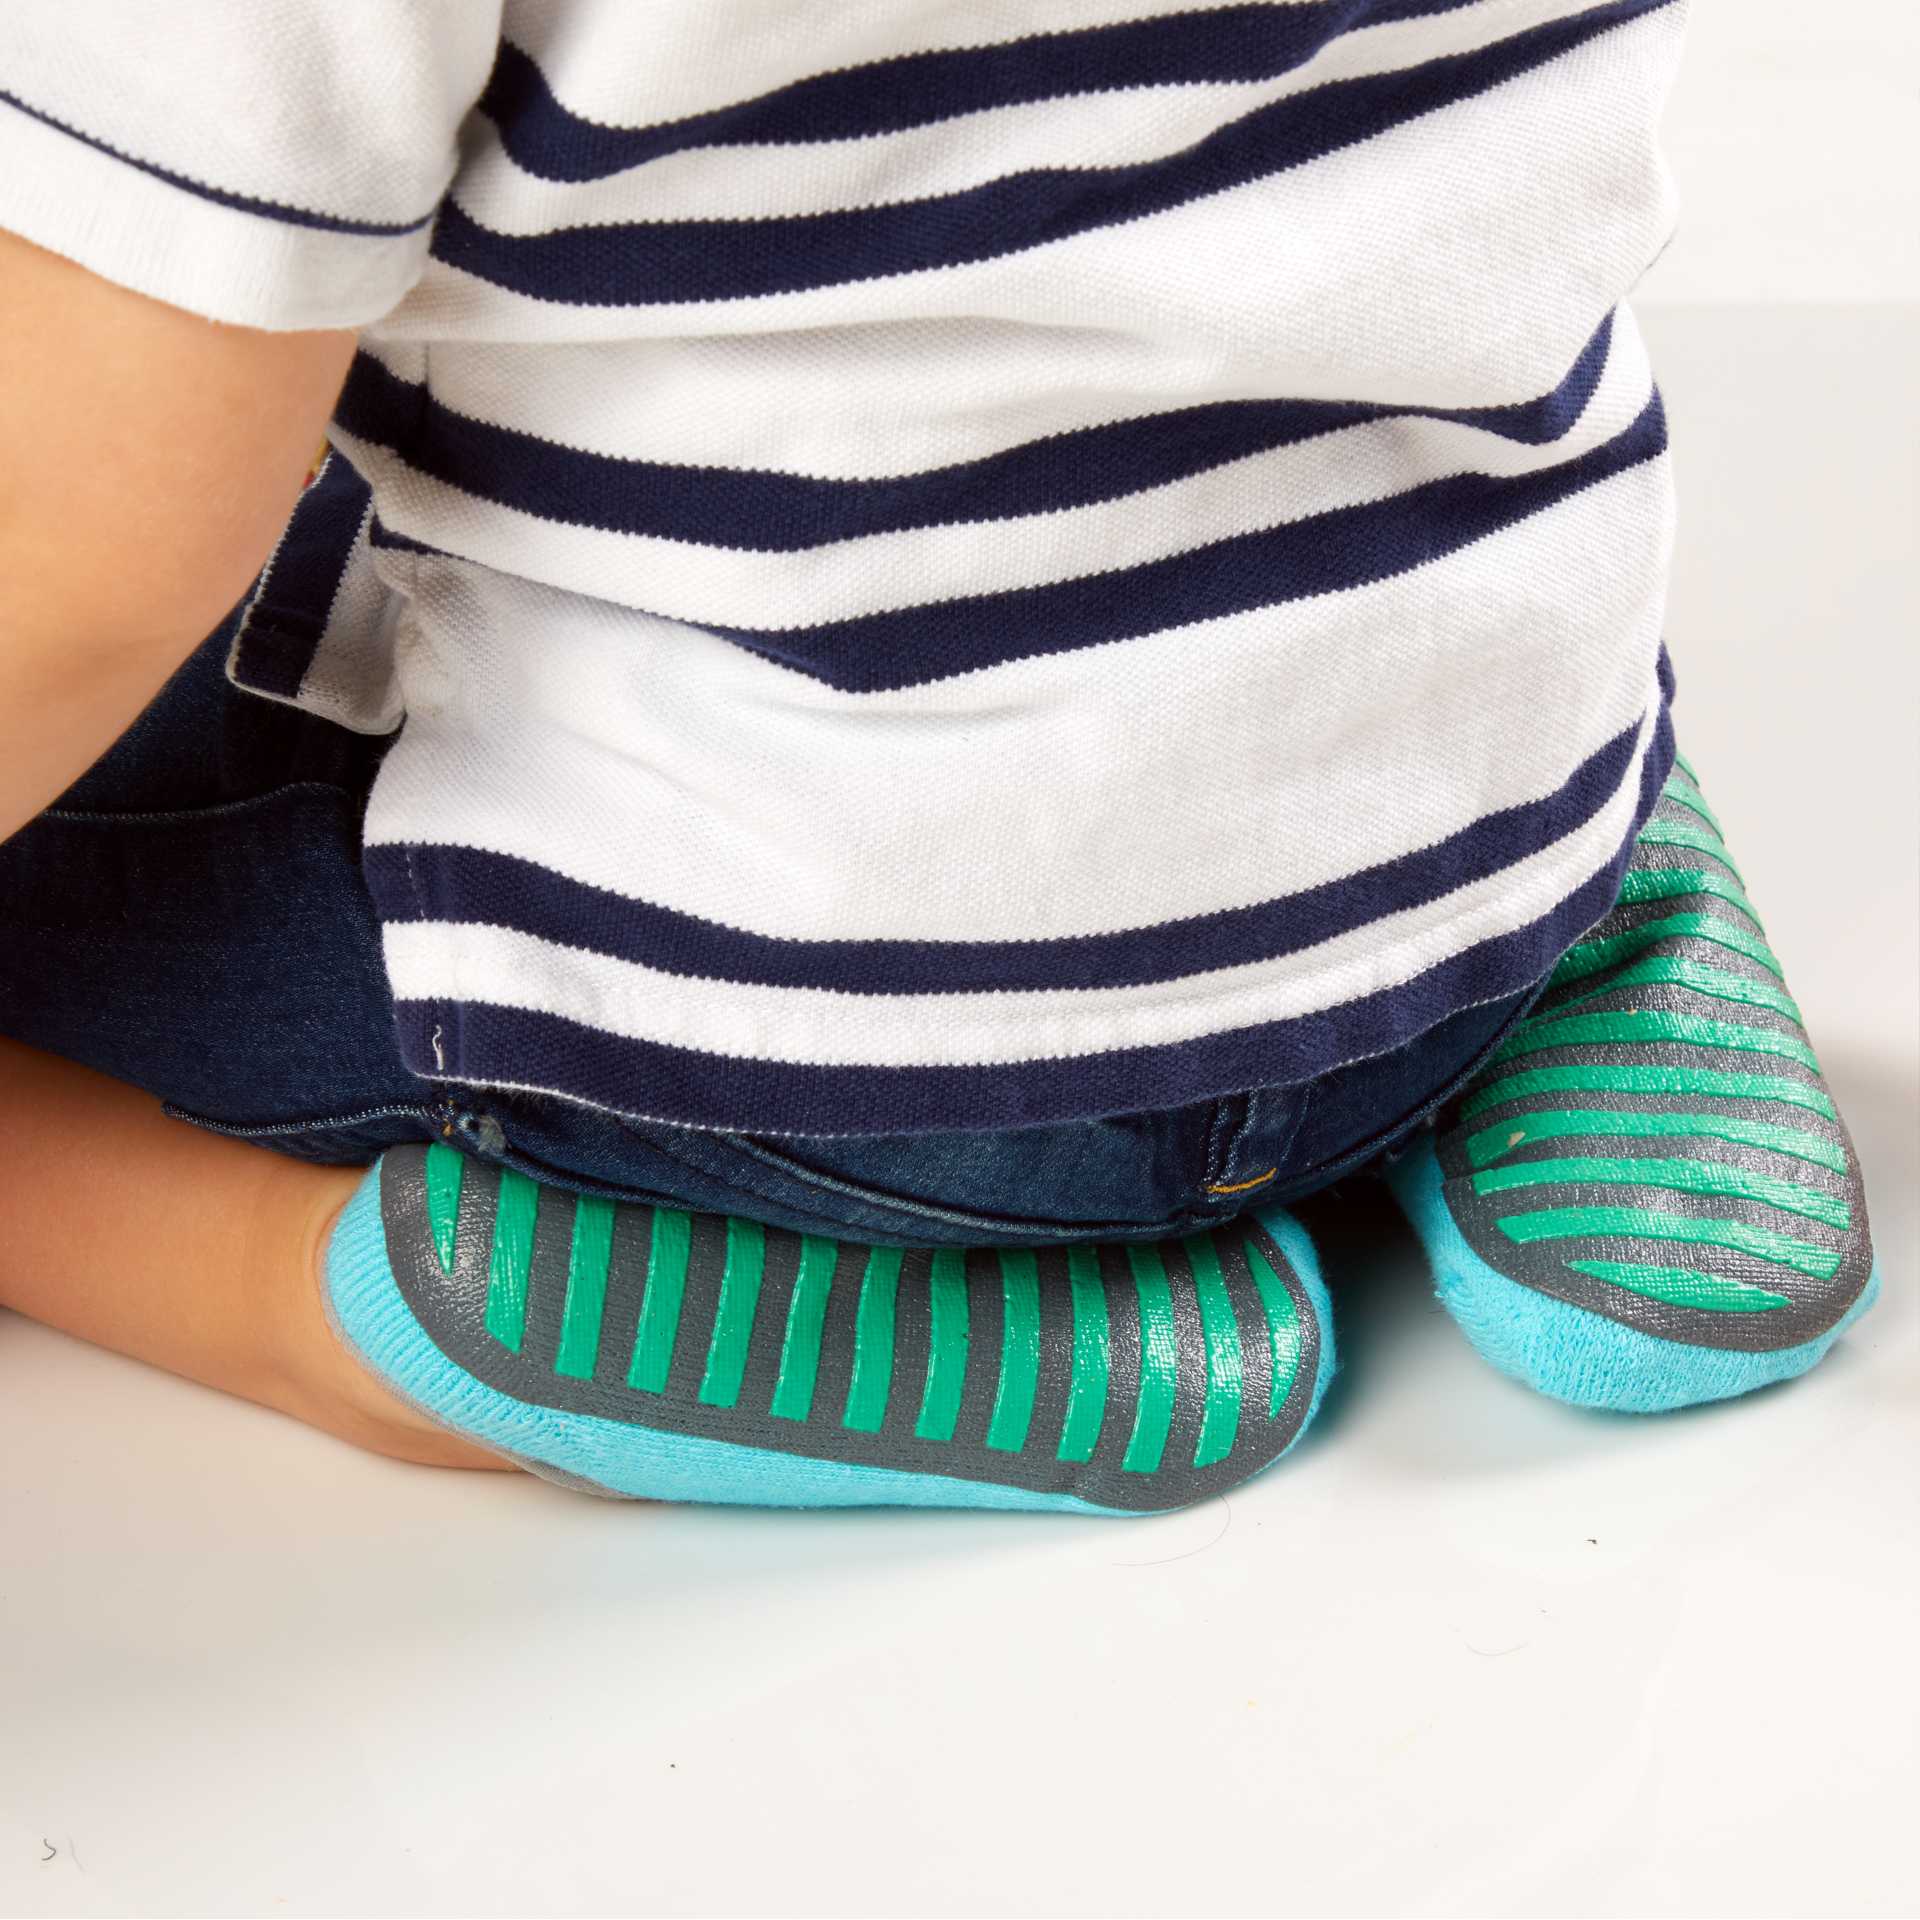 How to Buy Safe Socks for Babies & Kids